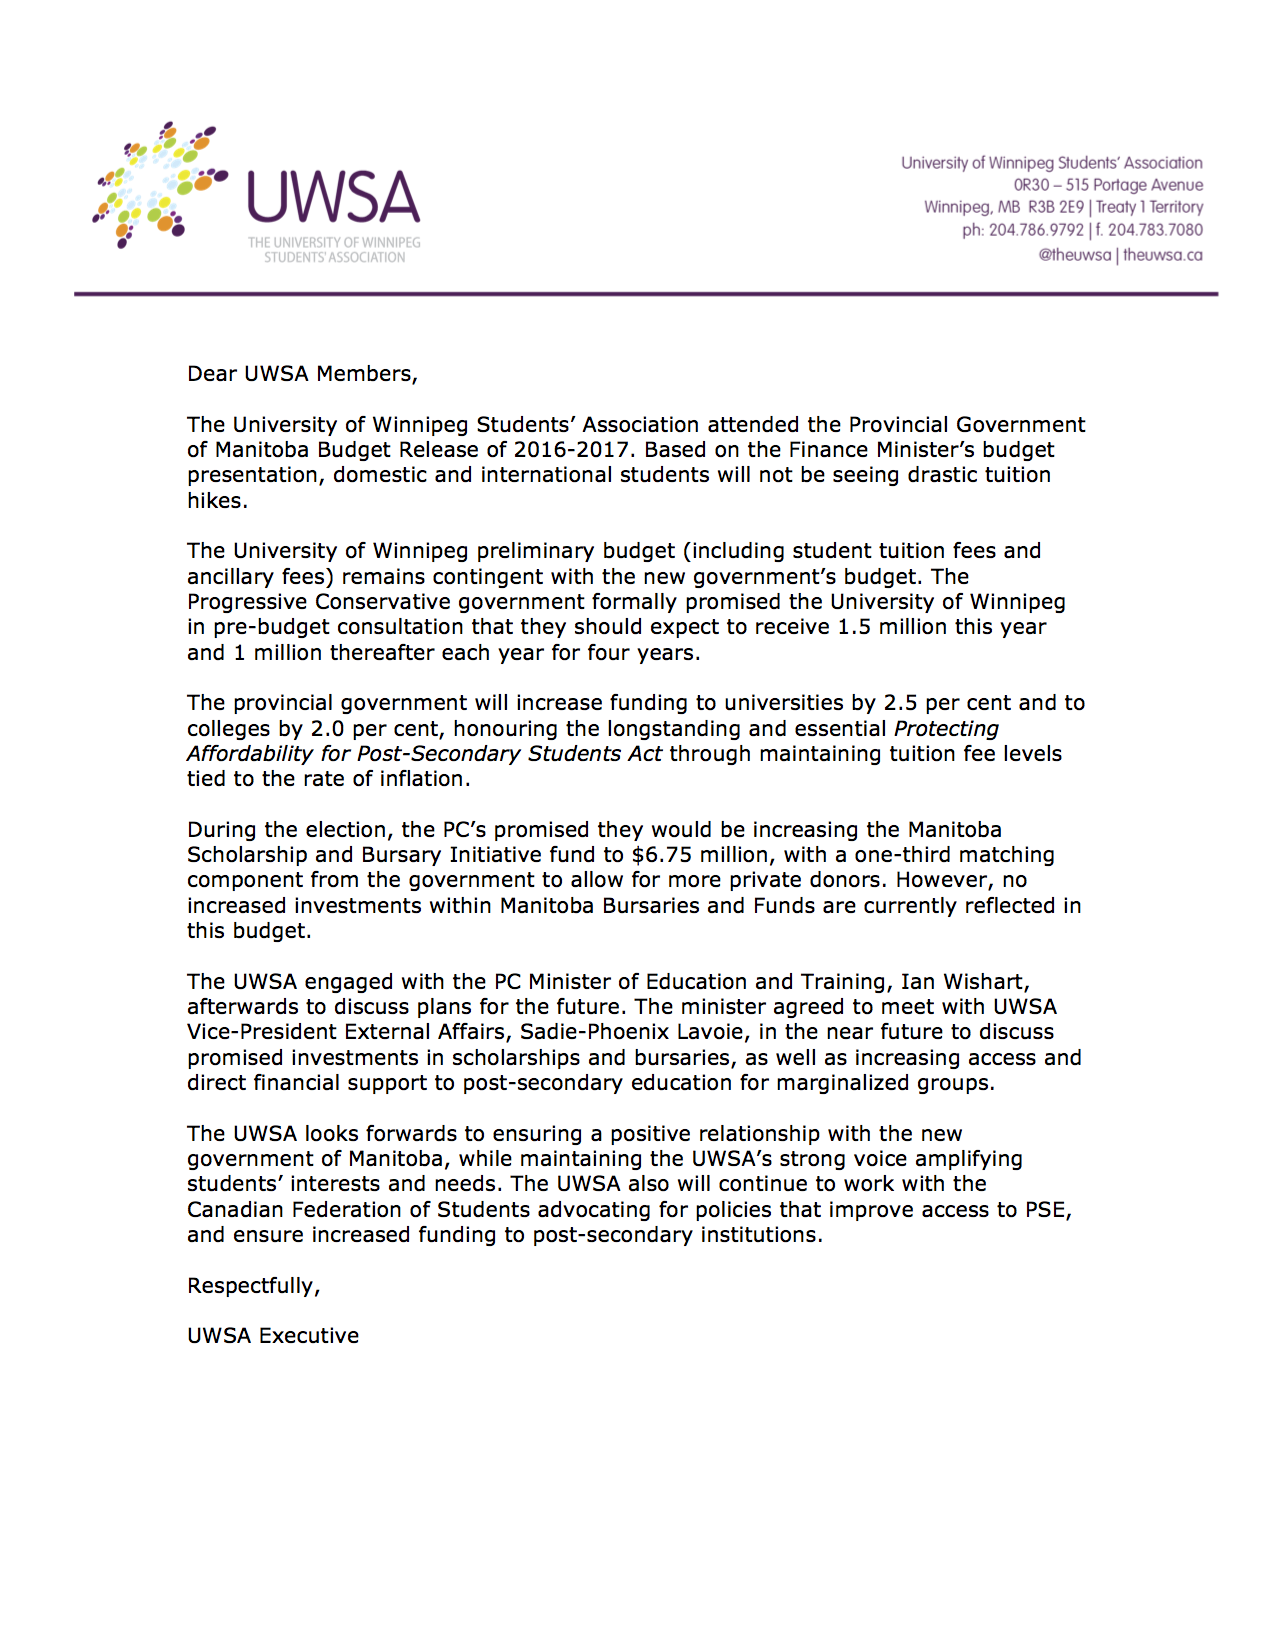 UWSA Budget Members Statement